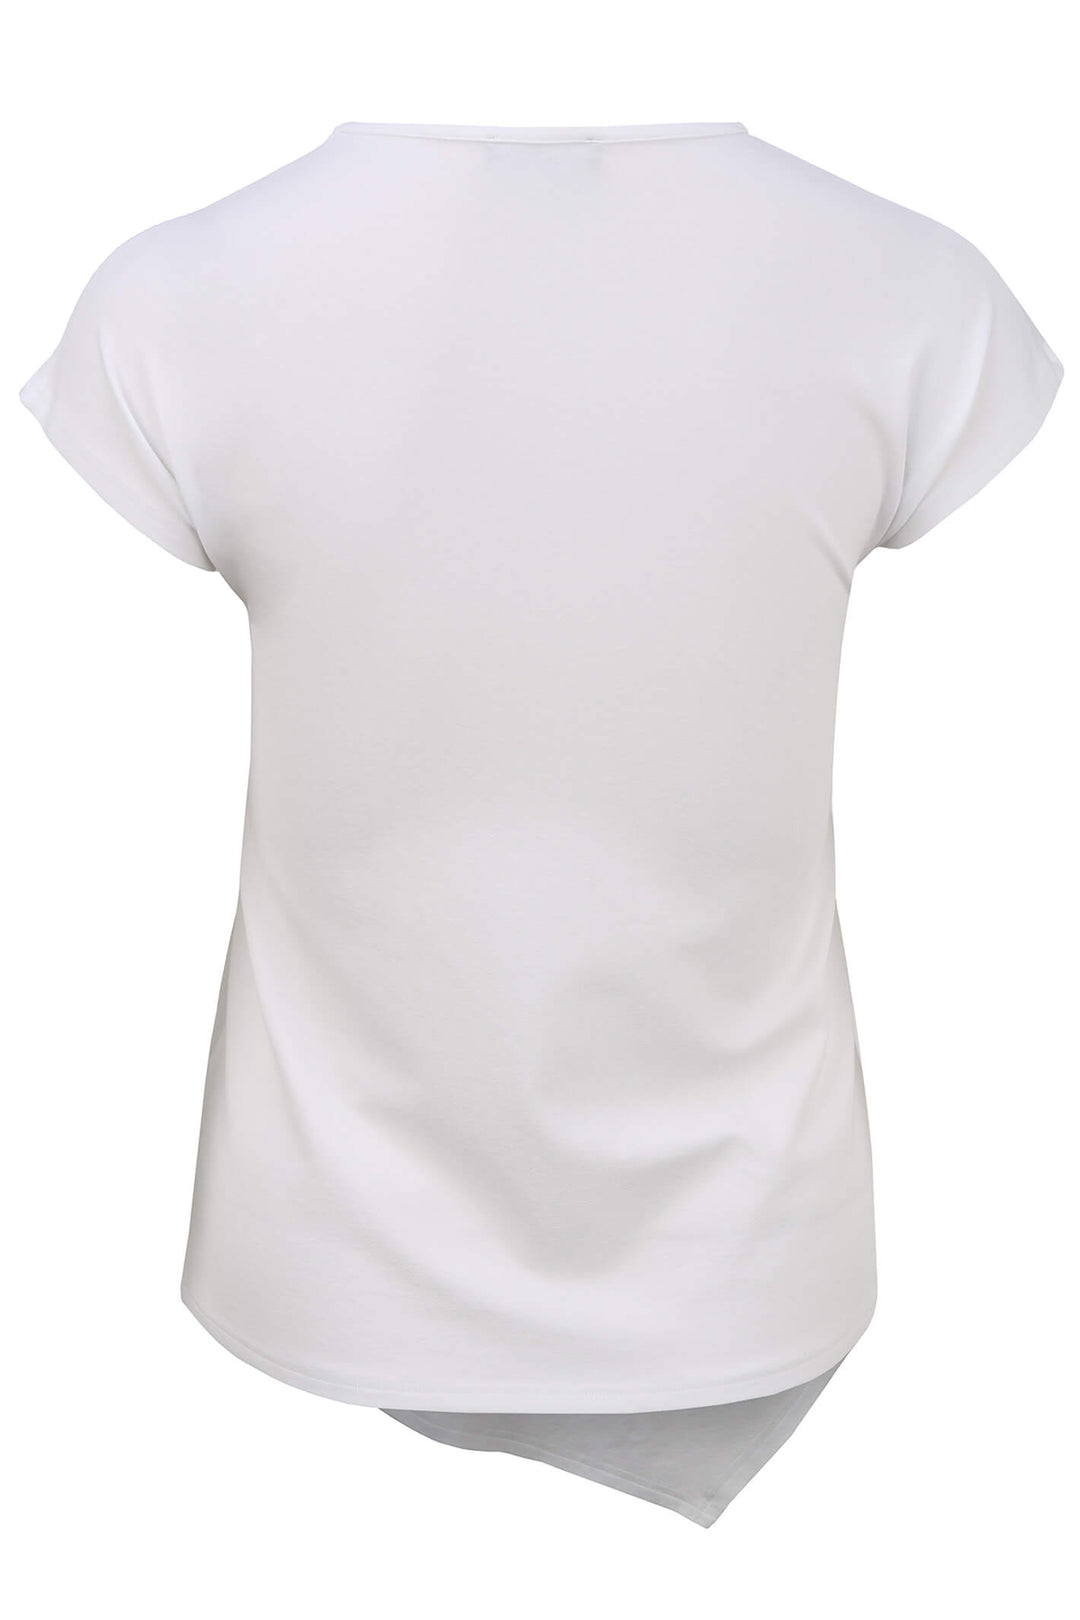 Doris Streich 501 270 White Asymmetric Hem T-Shirt - Shirley Allum Boutique